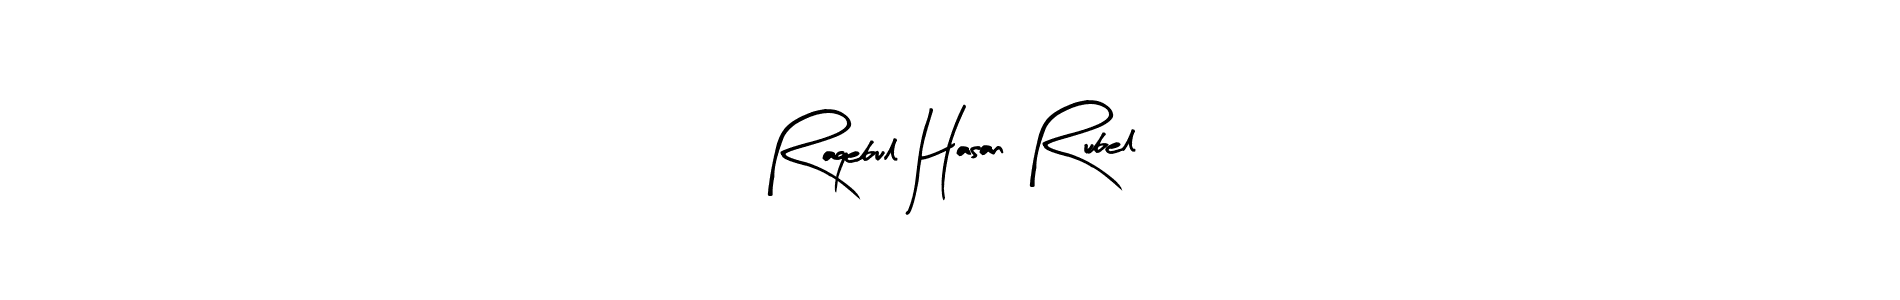 How to Draw Raqebul Hasan Rubel signature style? Arty Signature is a latest design signature styles for name Raqebul Hasan Rubel. Raqebul Hasan Rubel signature style 8 images and pictures png